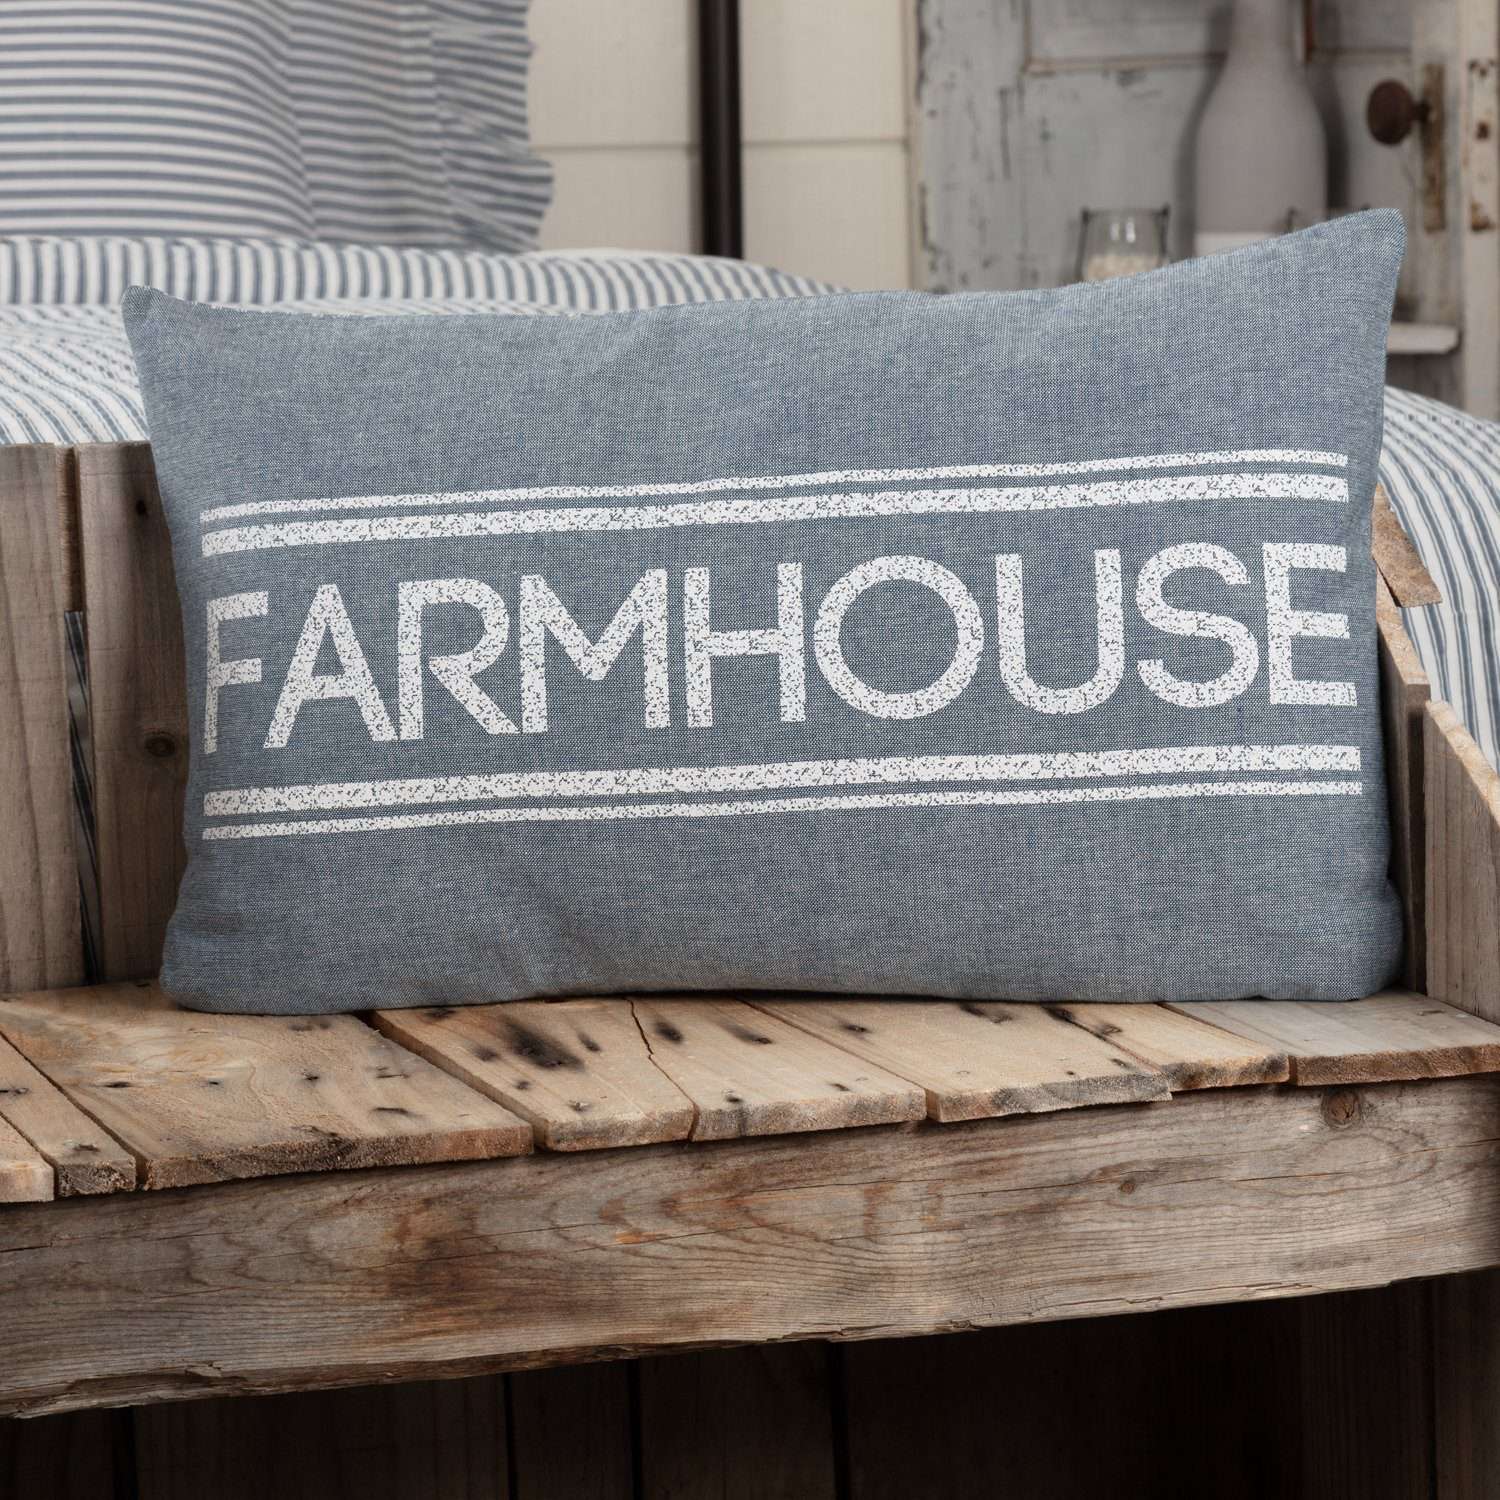 Sawyer Mill Farmhouse Pillow Charcoal, Red & Blue Pillows VHC Brands 